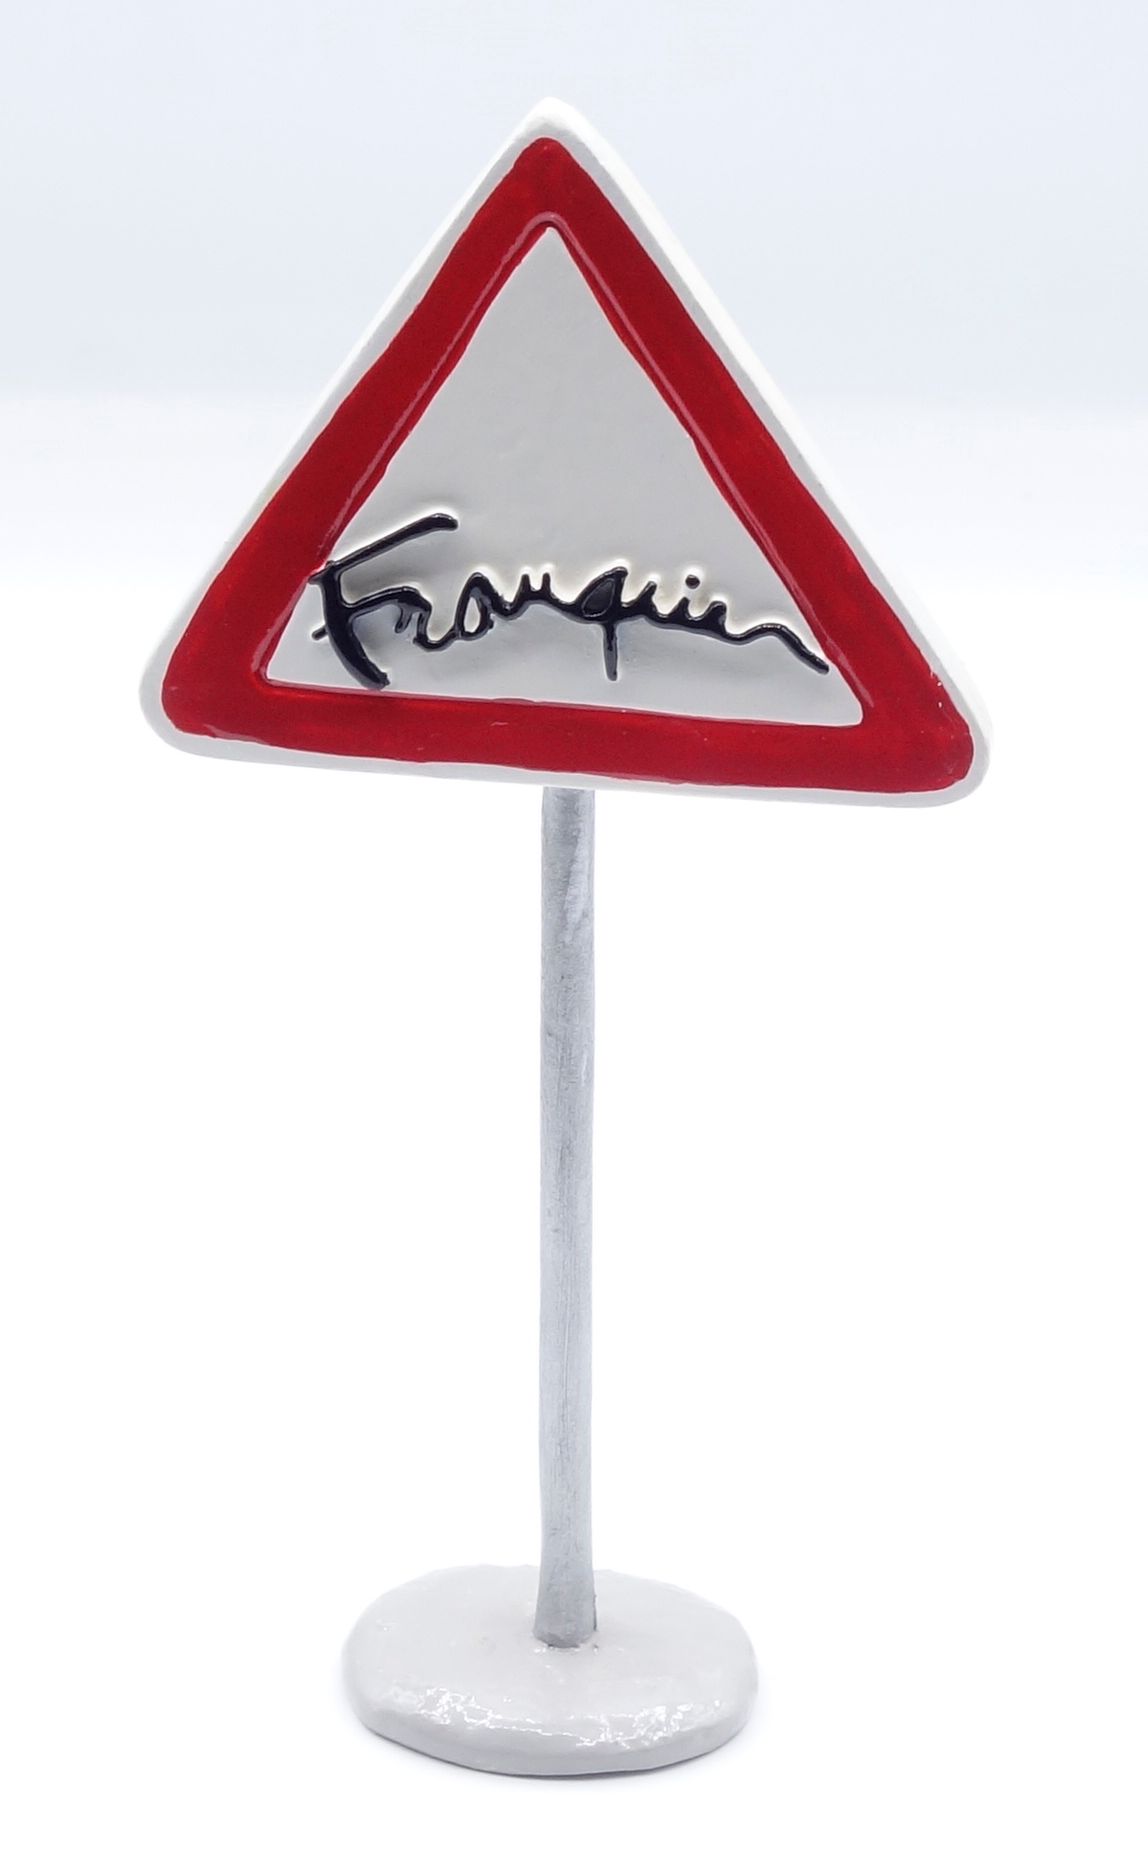 André FRANQUIN 
PIXI: Signatures Franquin, Straßenschild 3770, 2007, n°/400, BC.